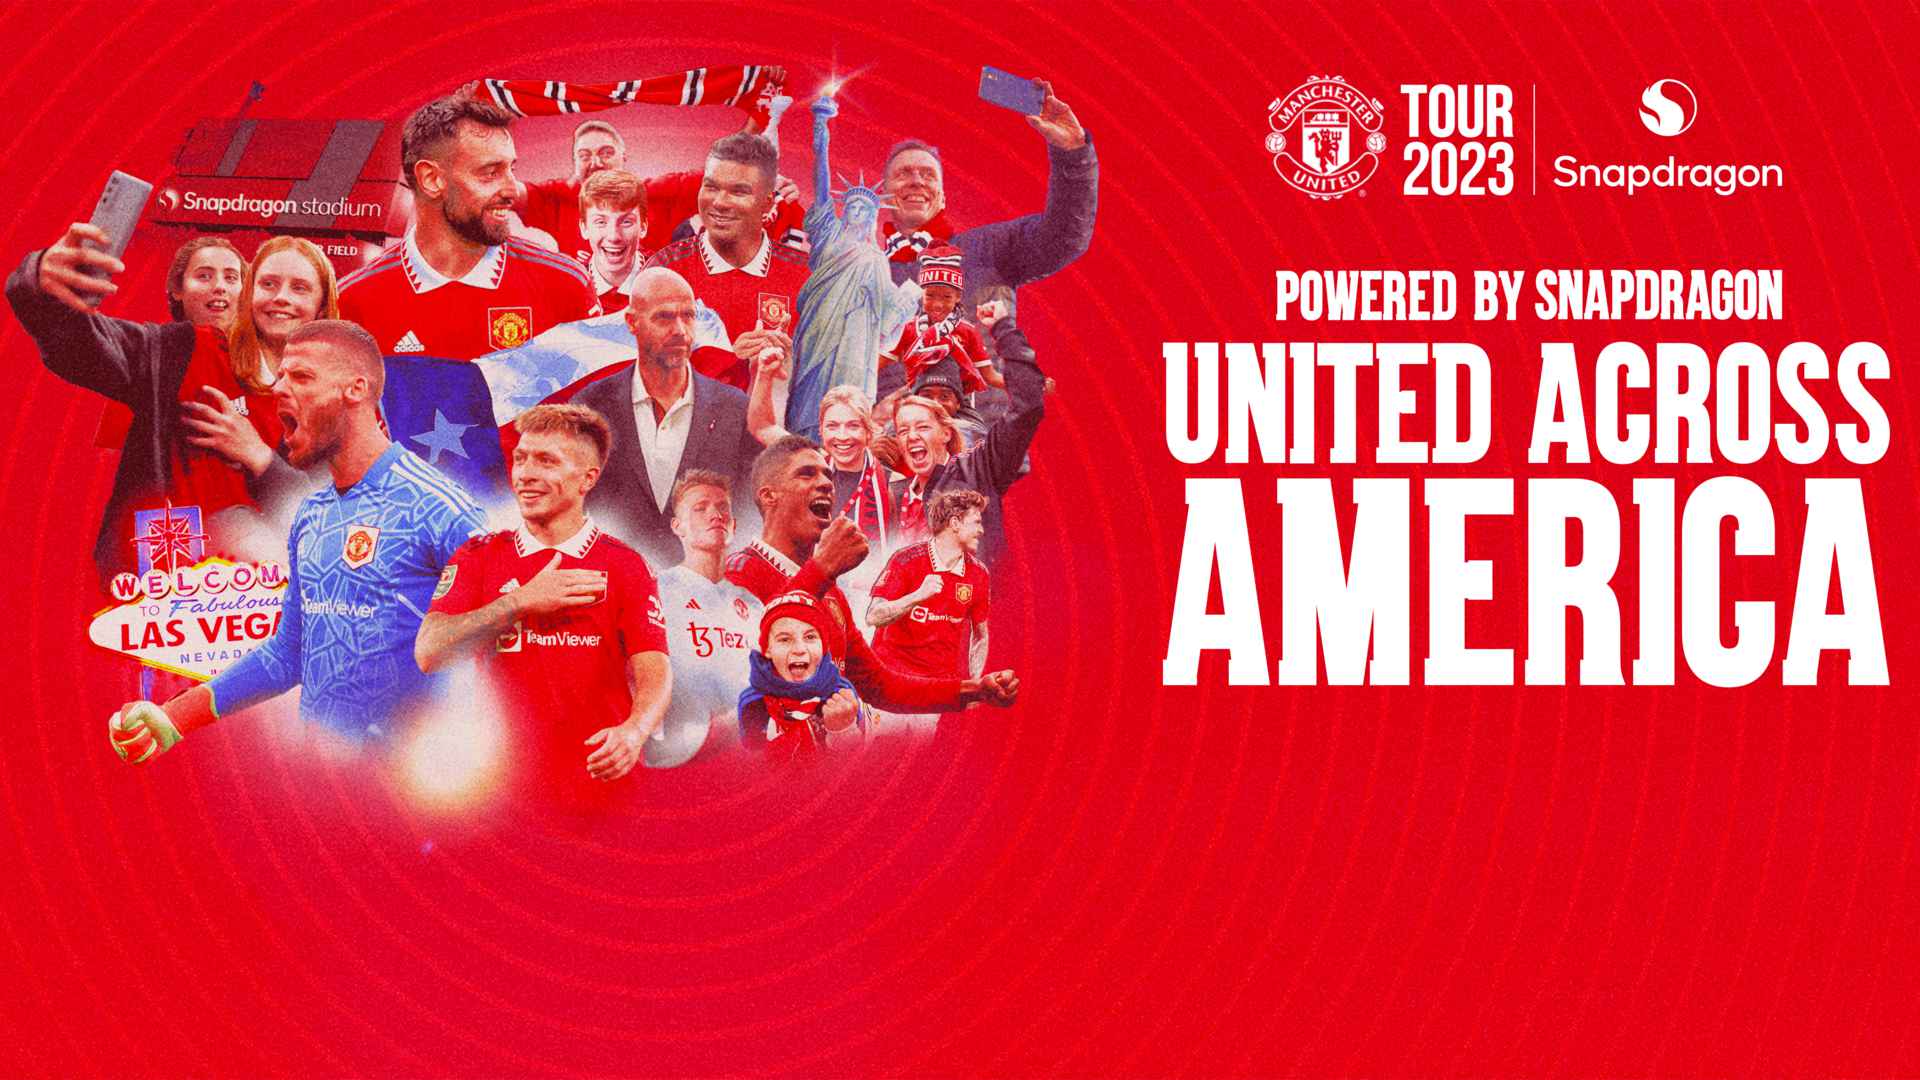 united usa tour 2023